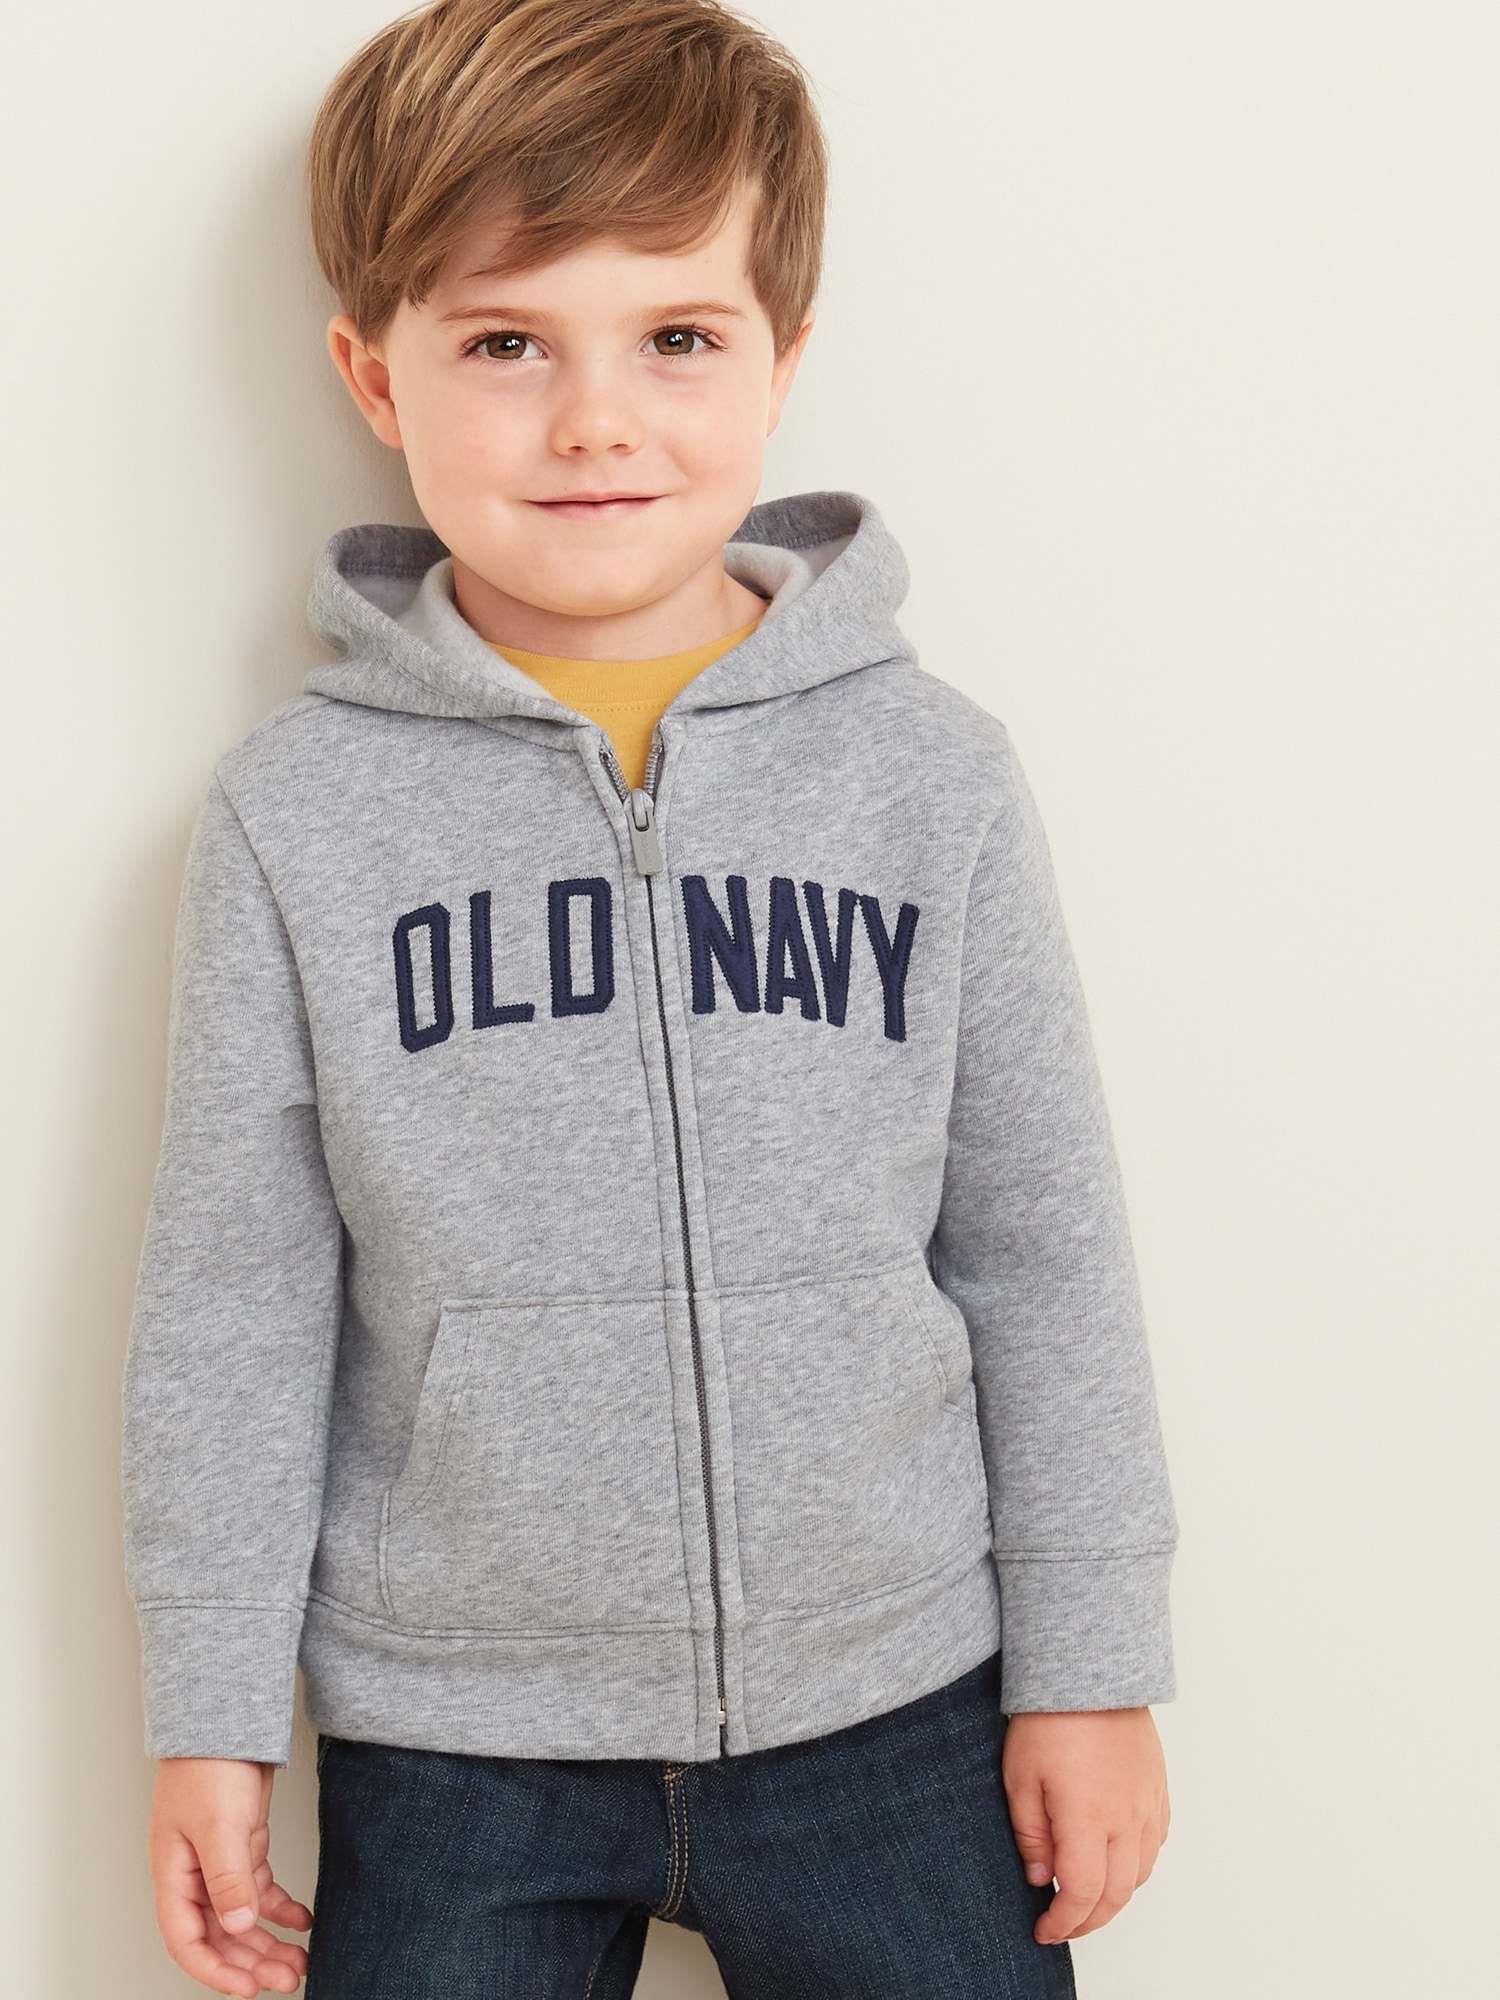 old navy toddler boy sweatshirt